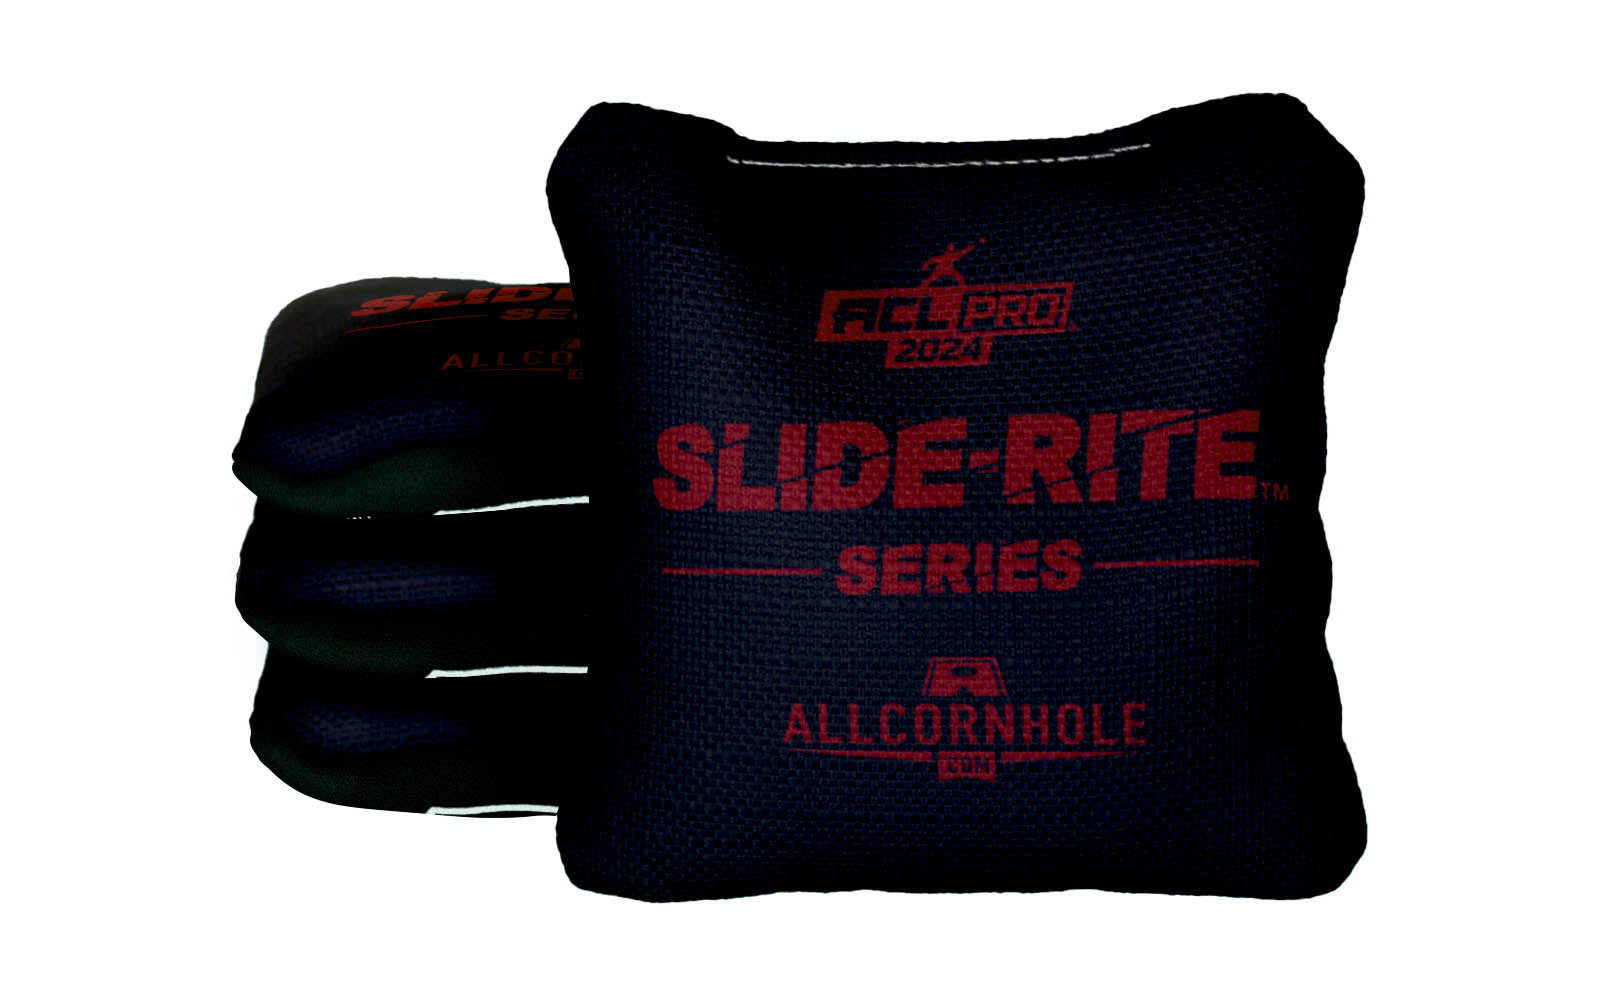 Officially Licensed Collegiate Cornhole Bags - AllCornhole Slide Rite - Set of 4 - University of South Carolina